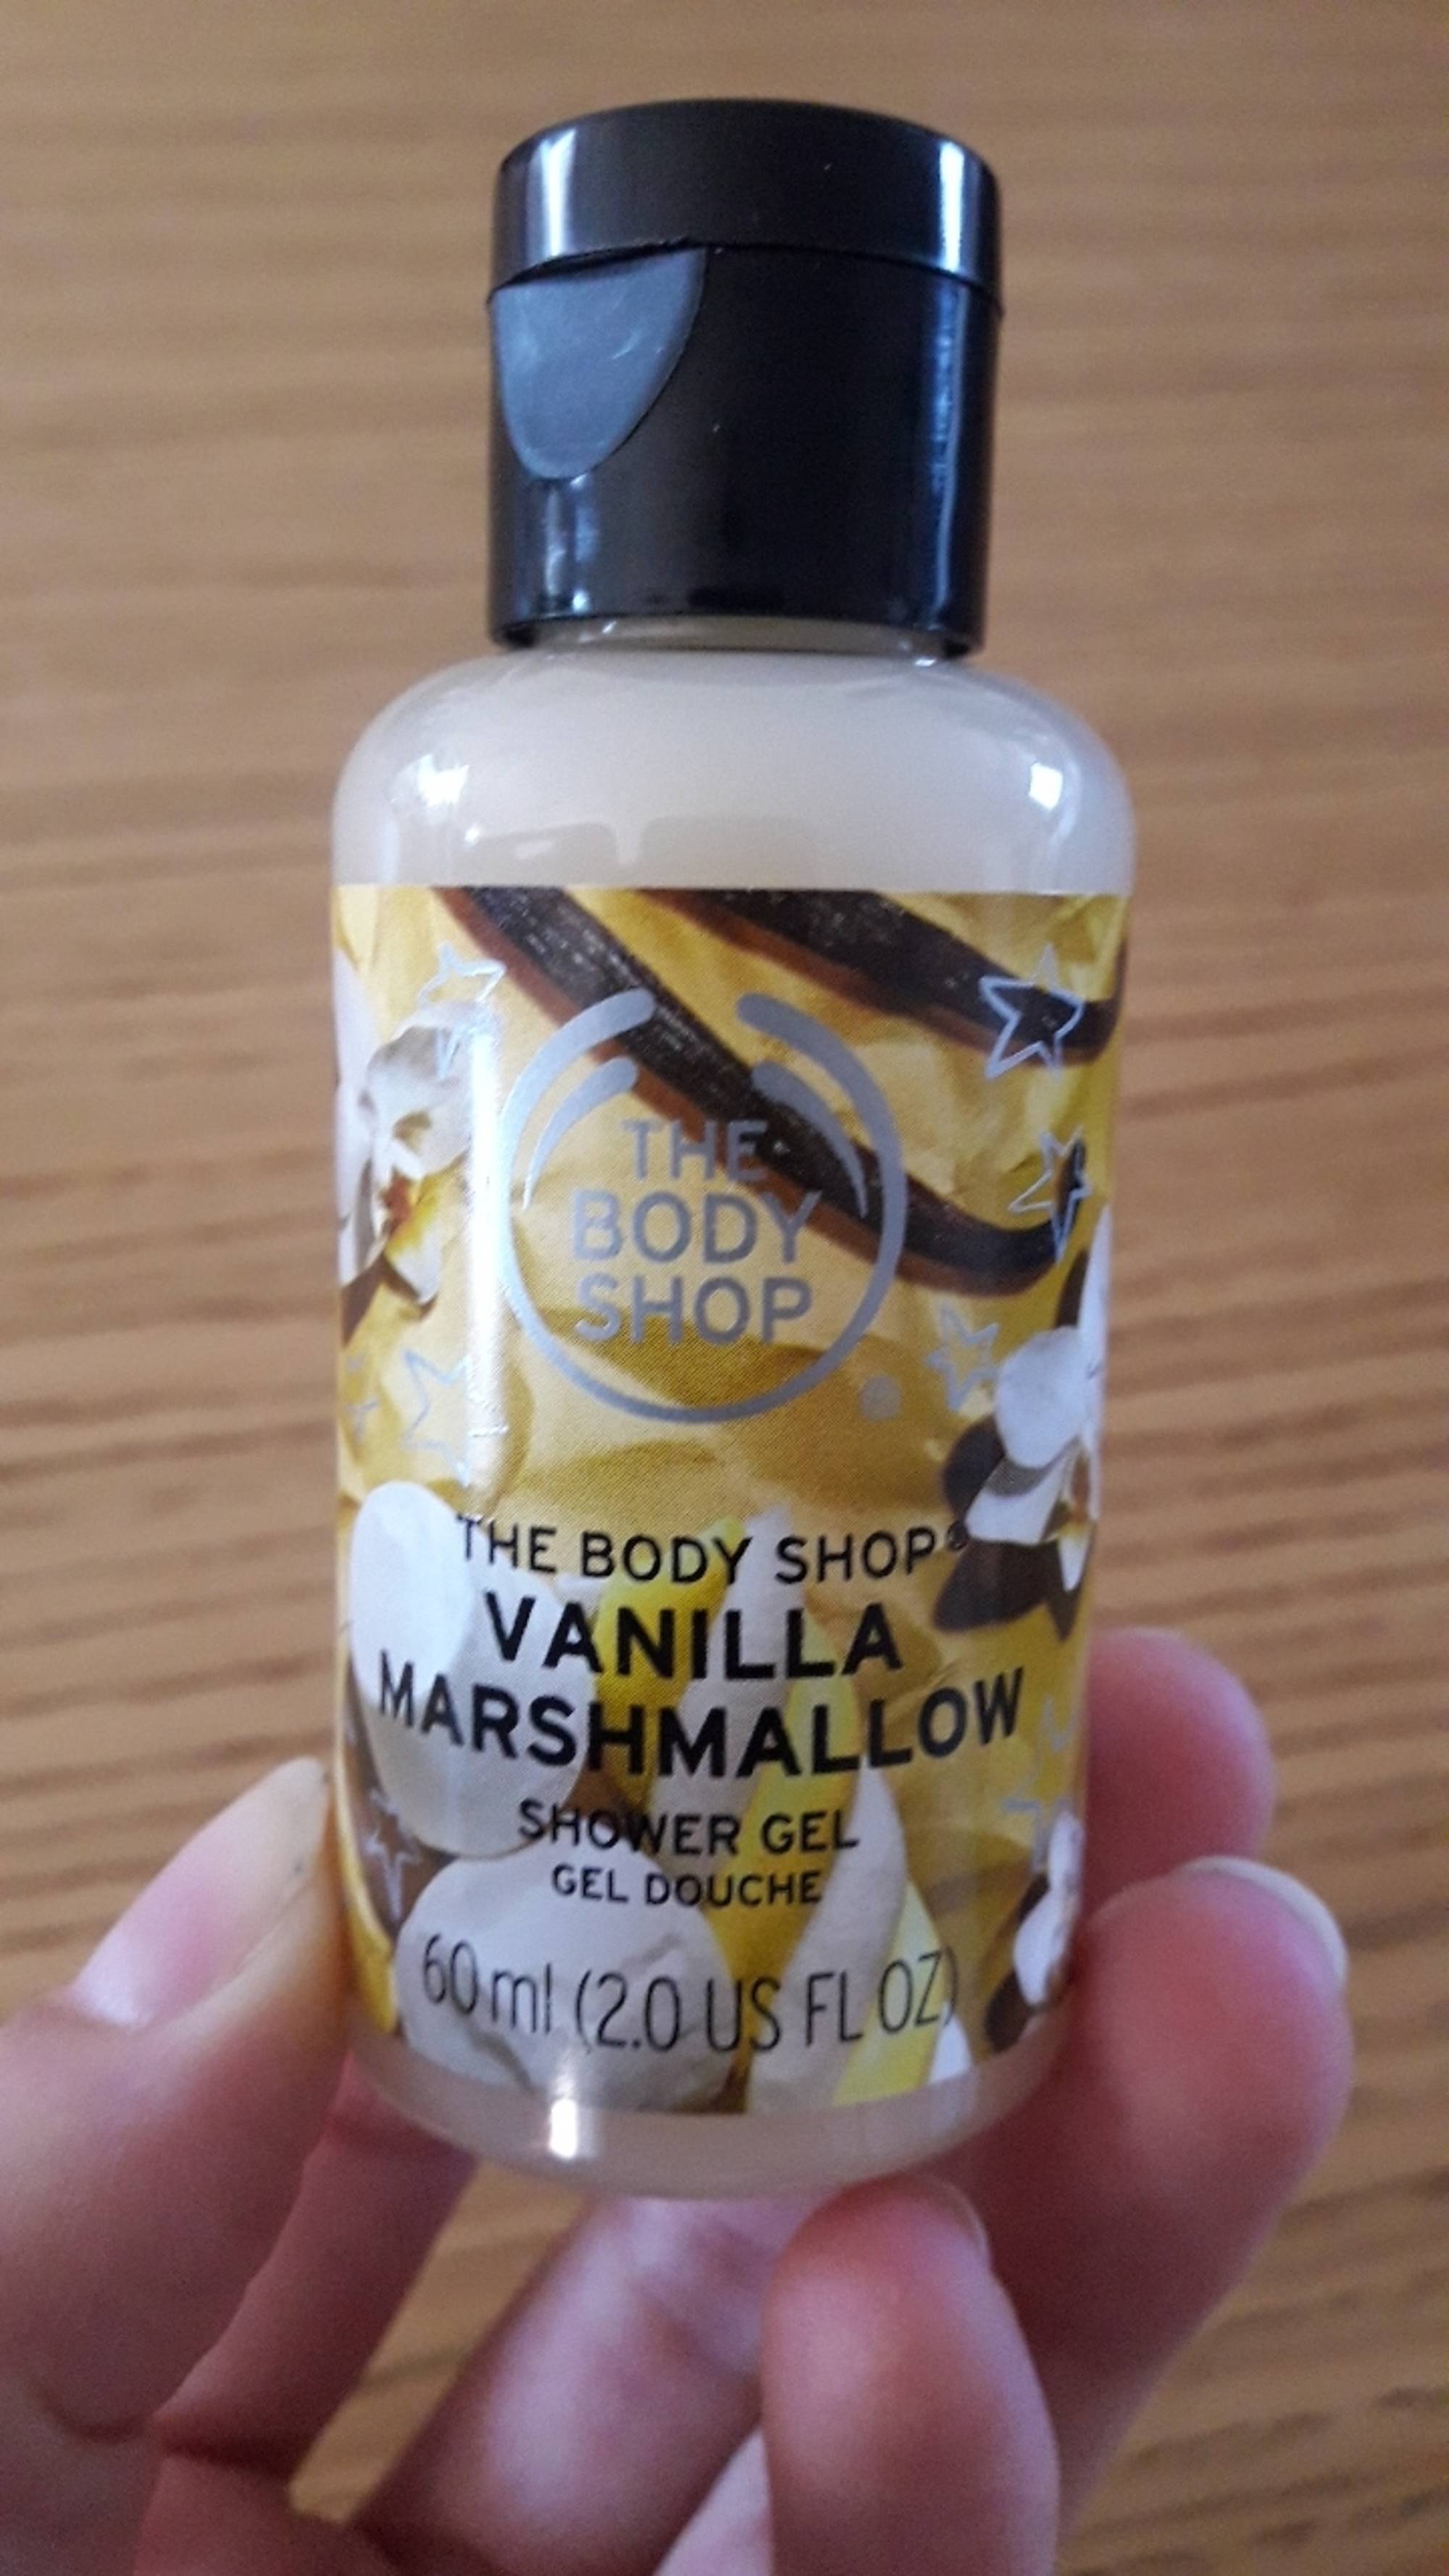 THE BODY SHOP - Vanilla marshmallow - Gel douche